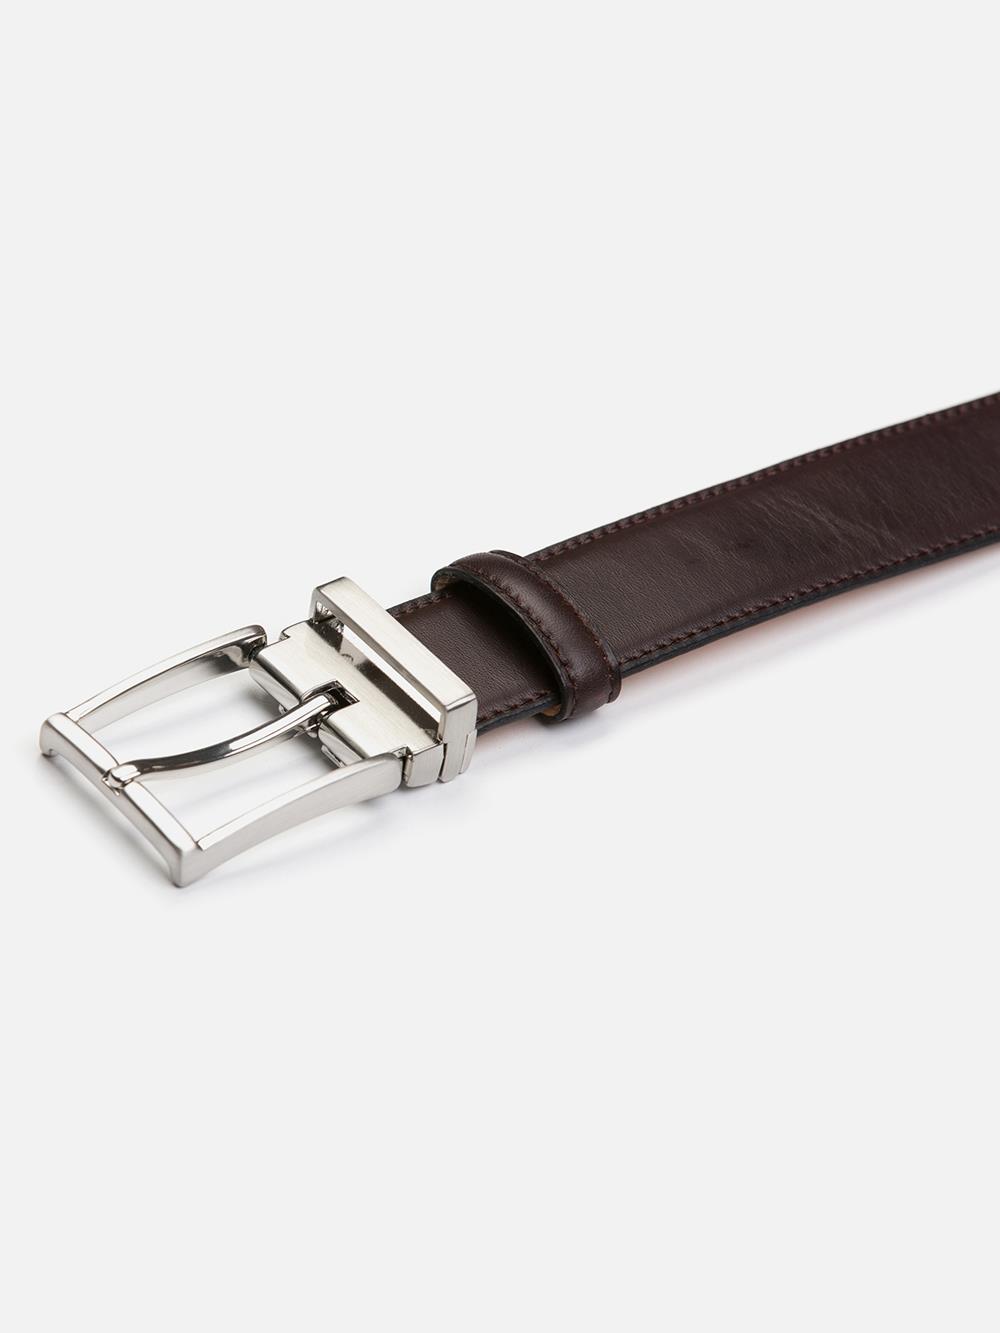 Chocolate leather belt